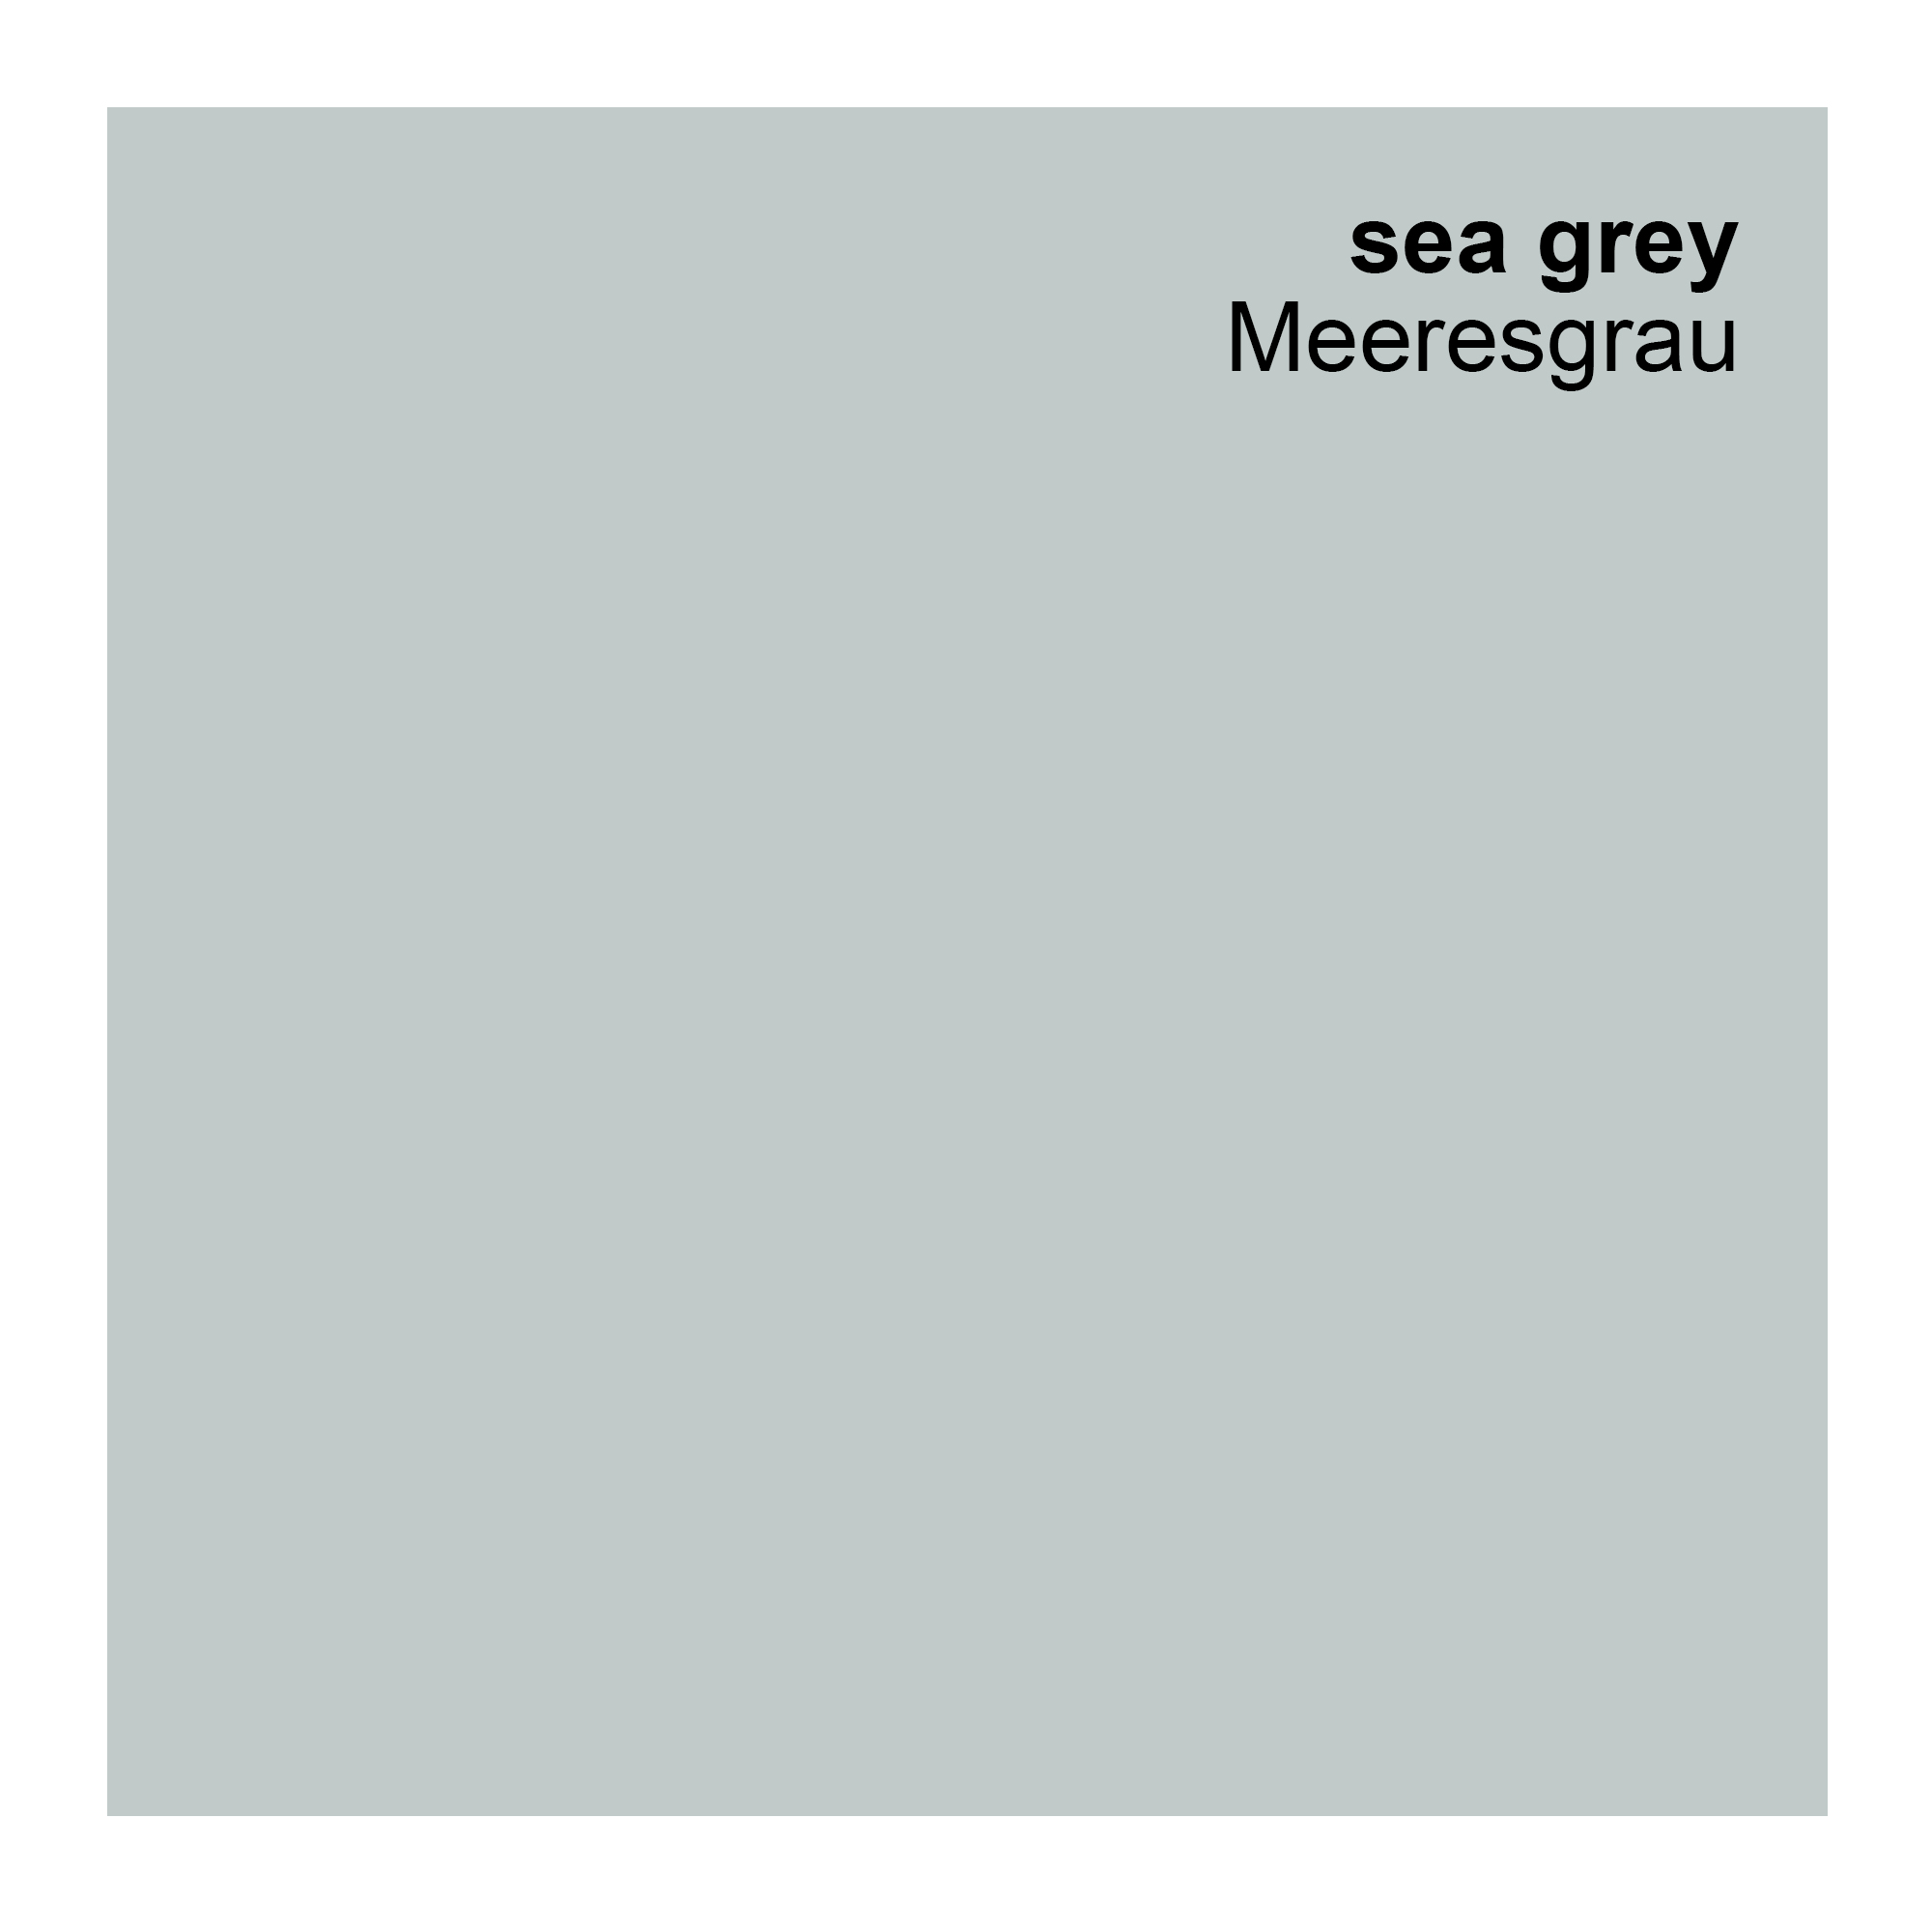 preismaxx Mattlatex urban colors, bunte Wandfarbe, grau, meeresgrau, sea grey 2,5L